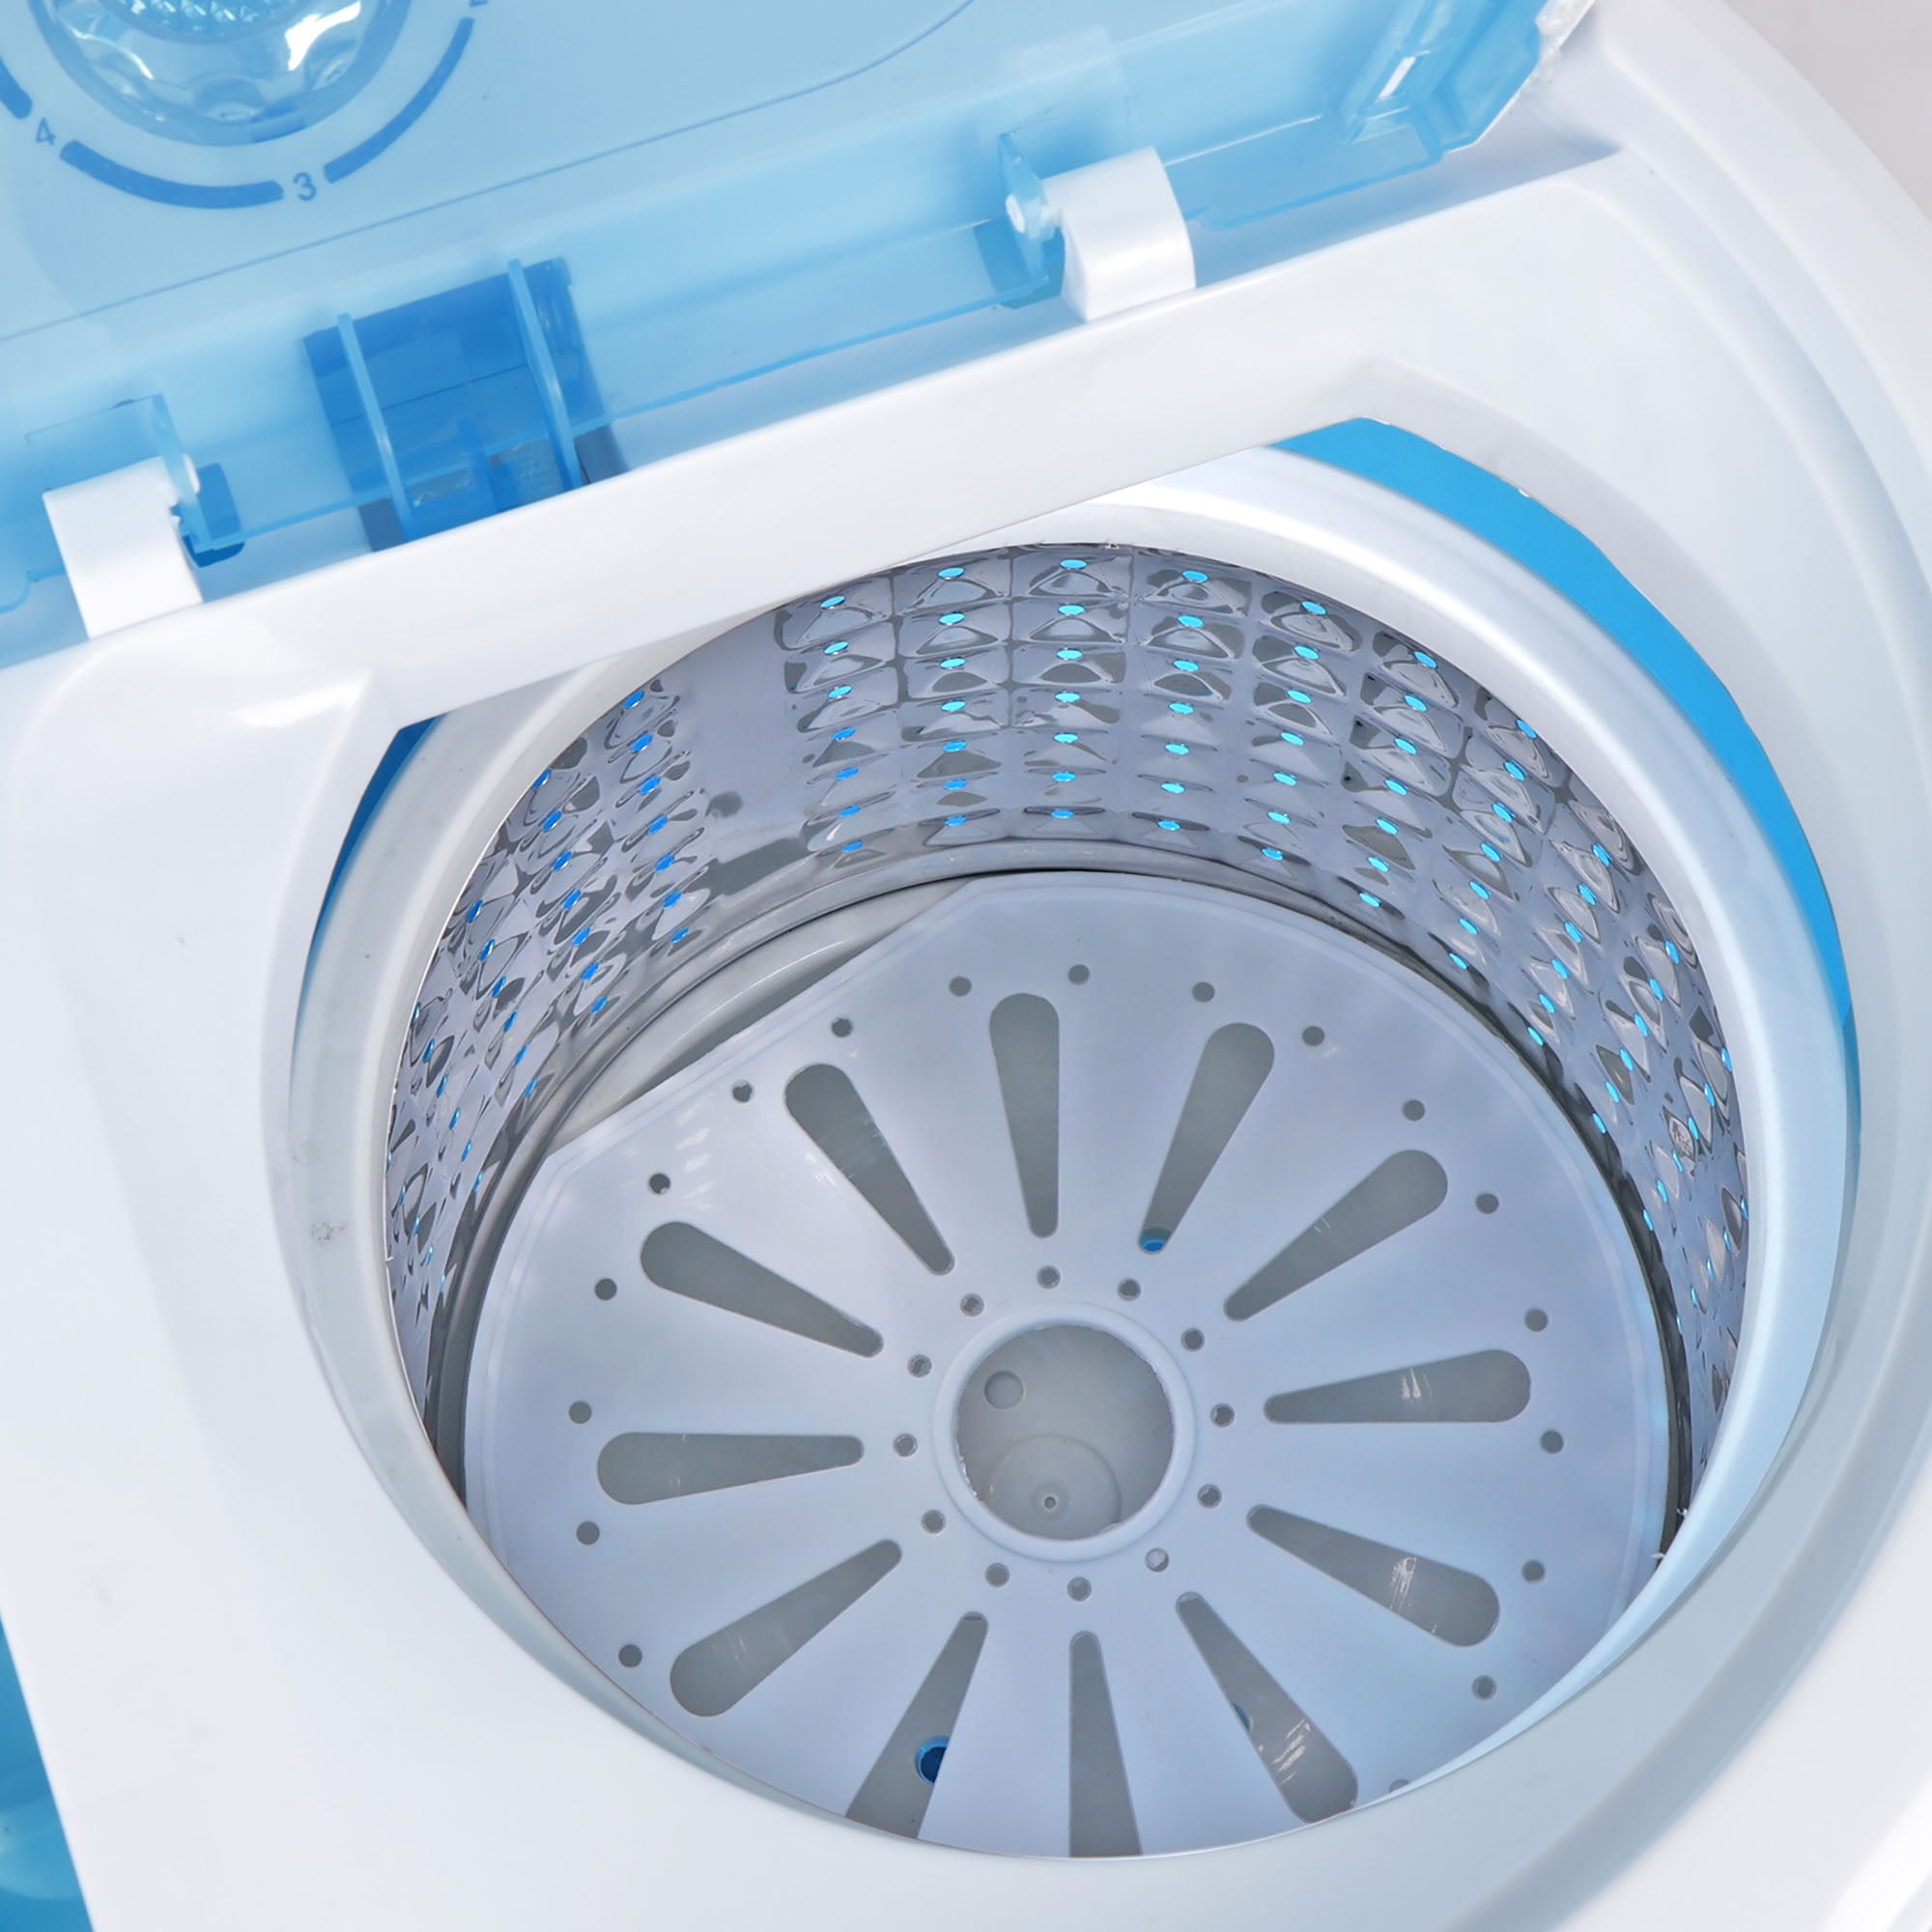 zen style portable washing machine